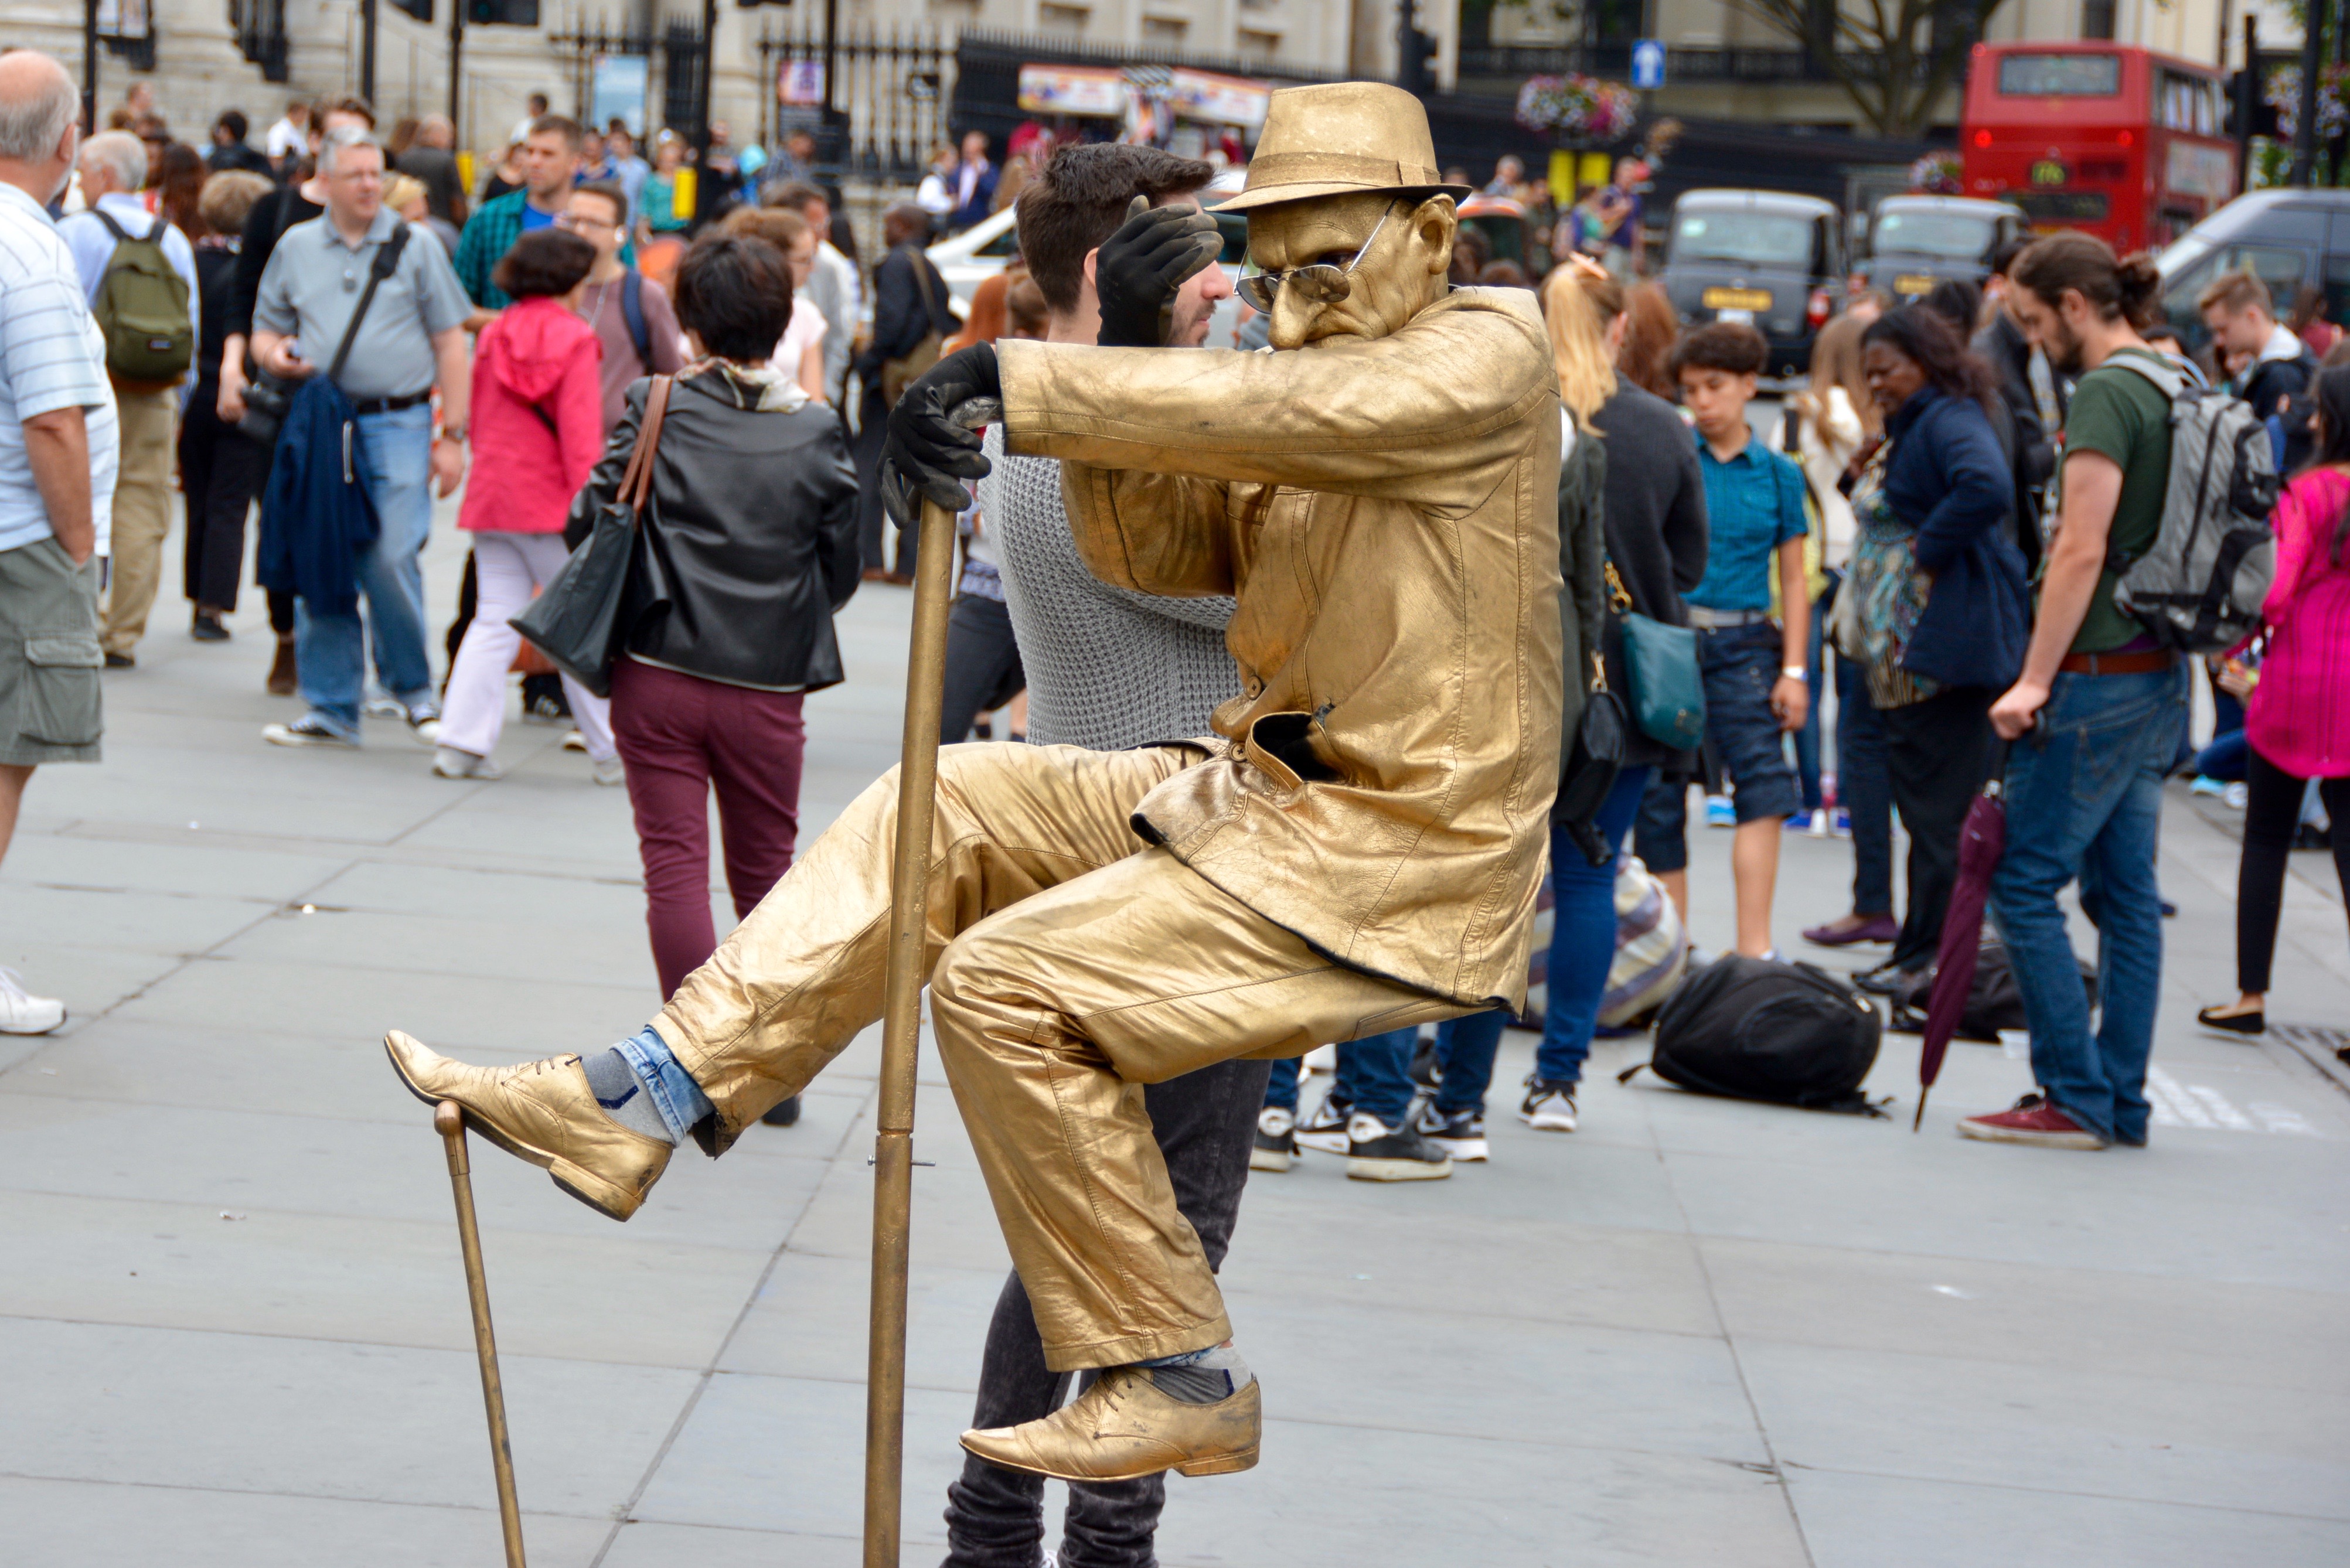 A street performer in Trafalgar Square, London 